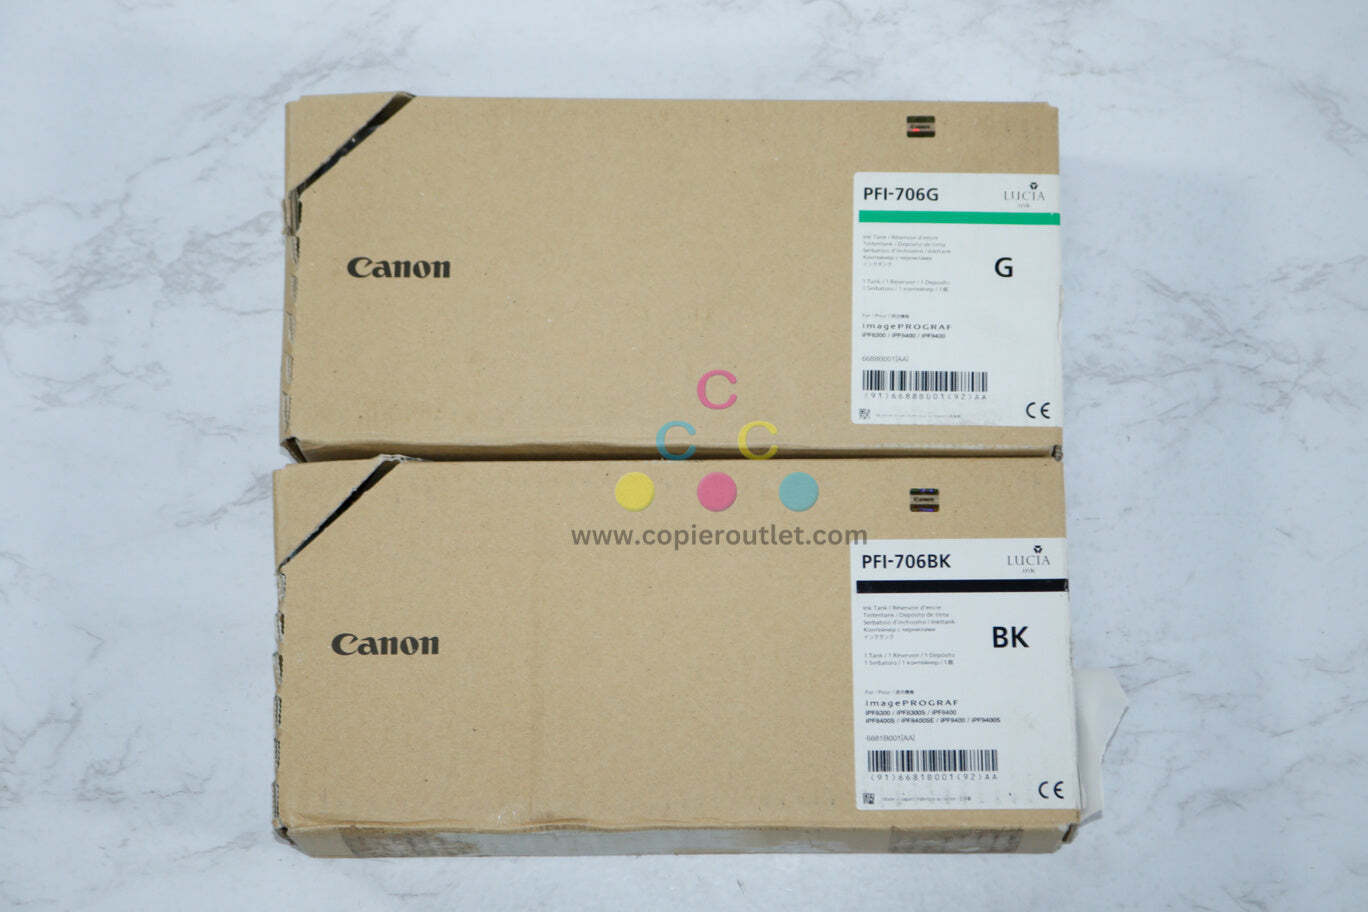 2 New OEM Canon imagePROGRAF 8400,8300,9400 PFI-706 Green&Black Ink Cartridges - $89.10